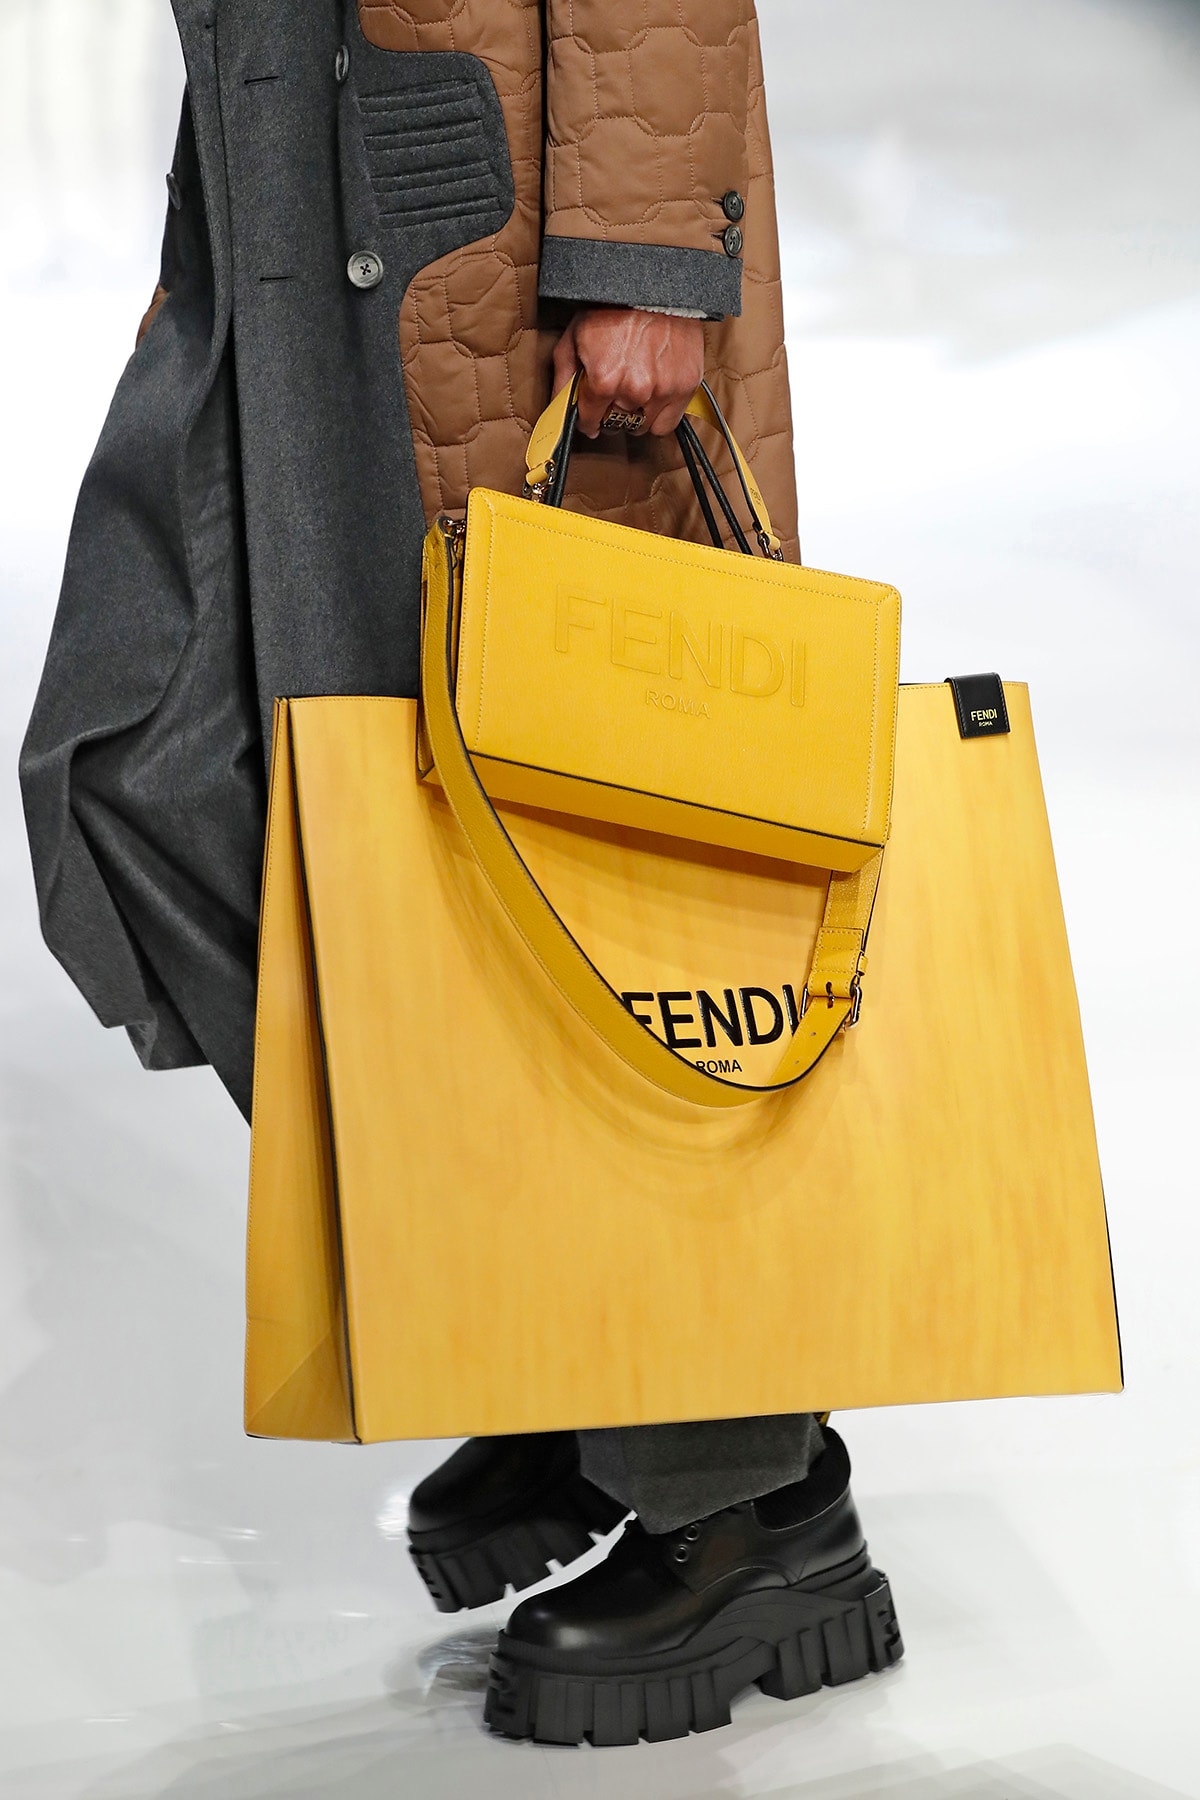 Fendi Fall/Winter 2020 Collection Shopping Bag